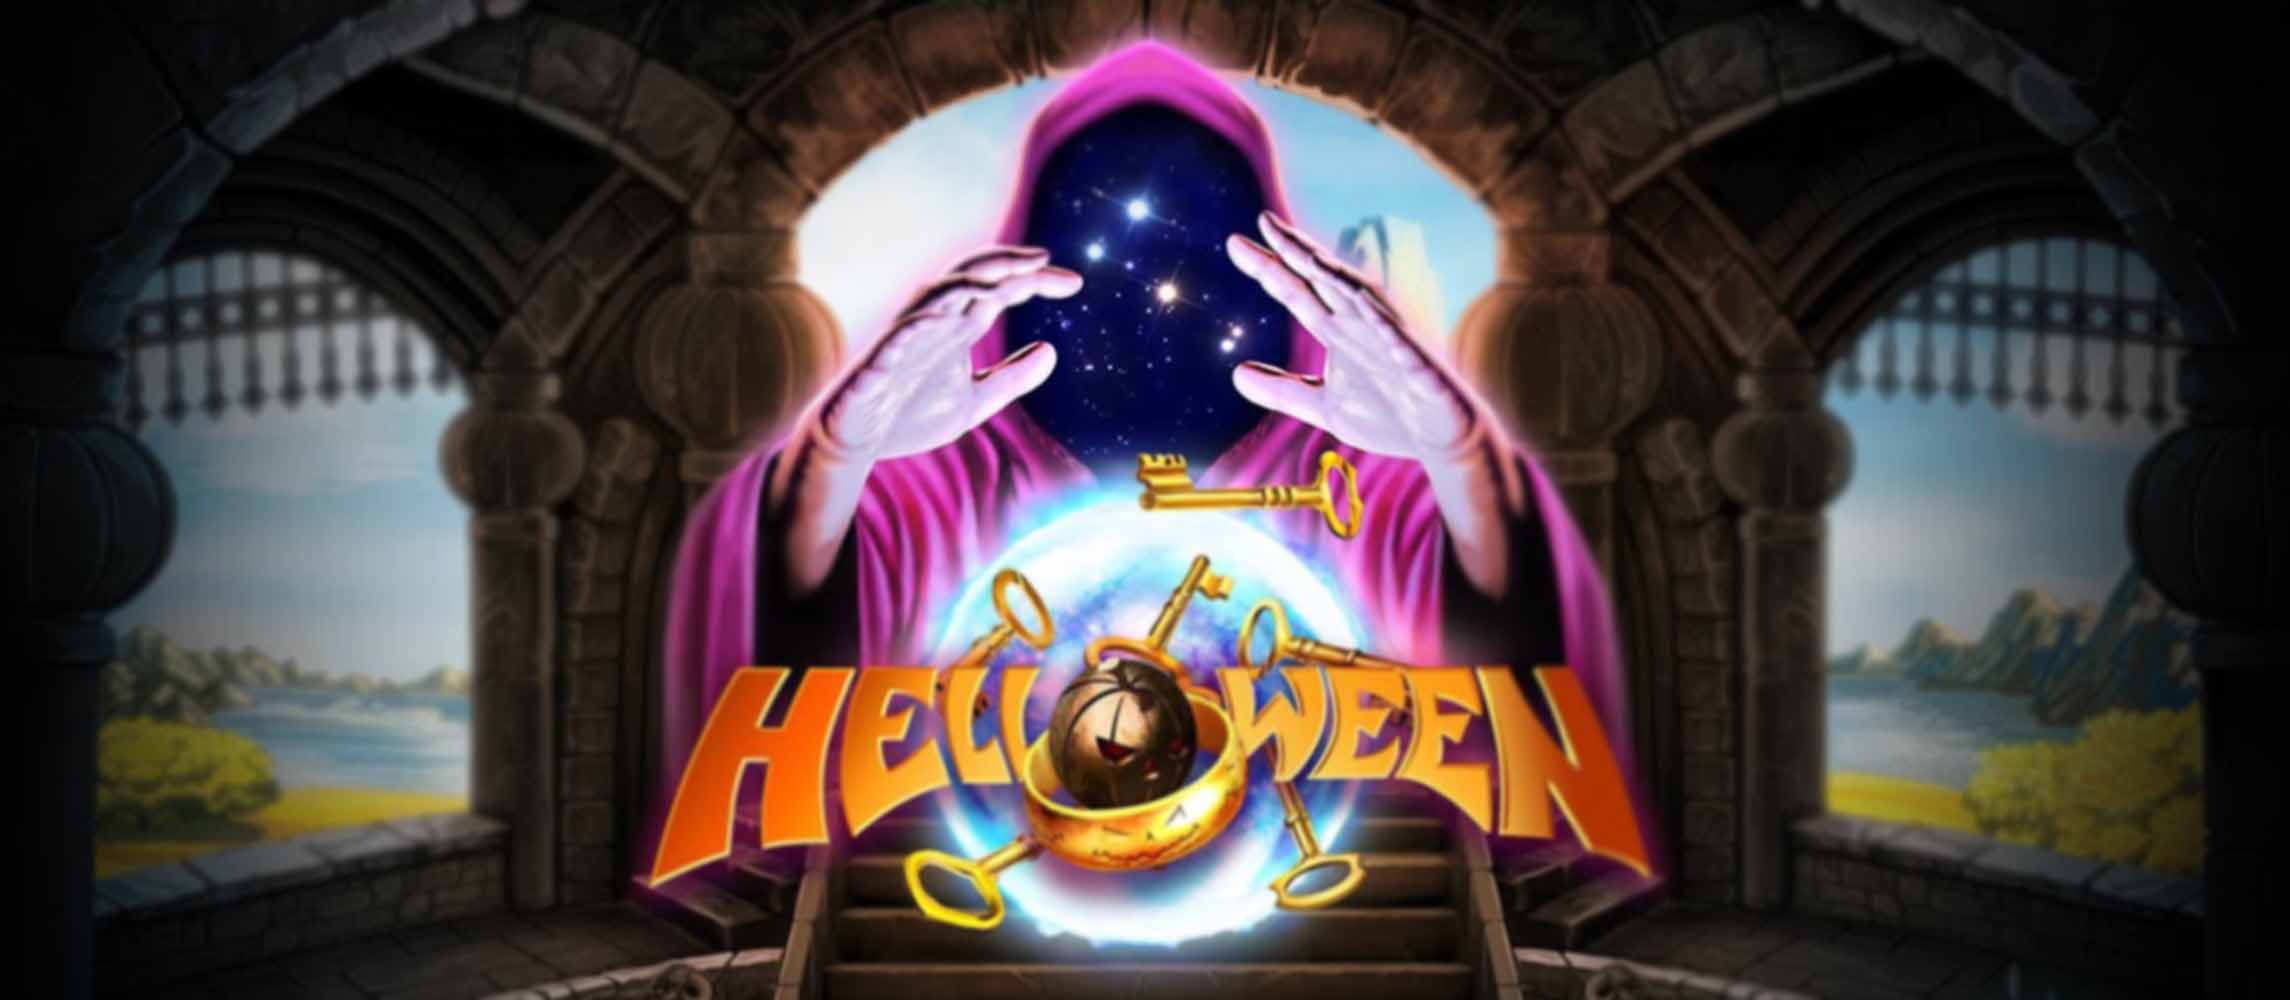 Helloween by Play’n GO